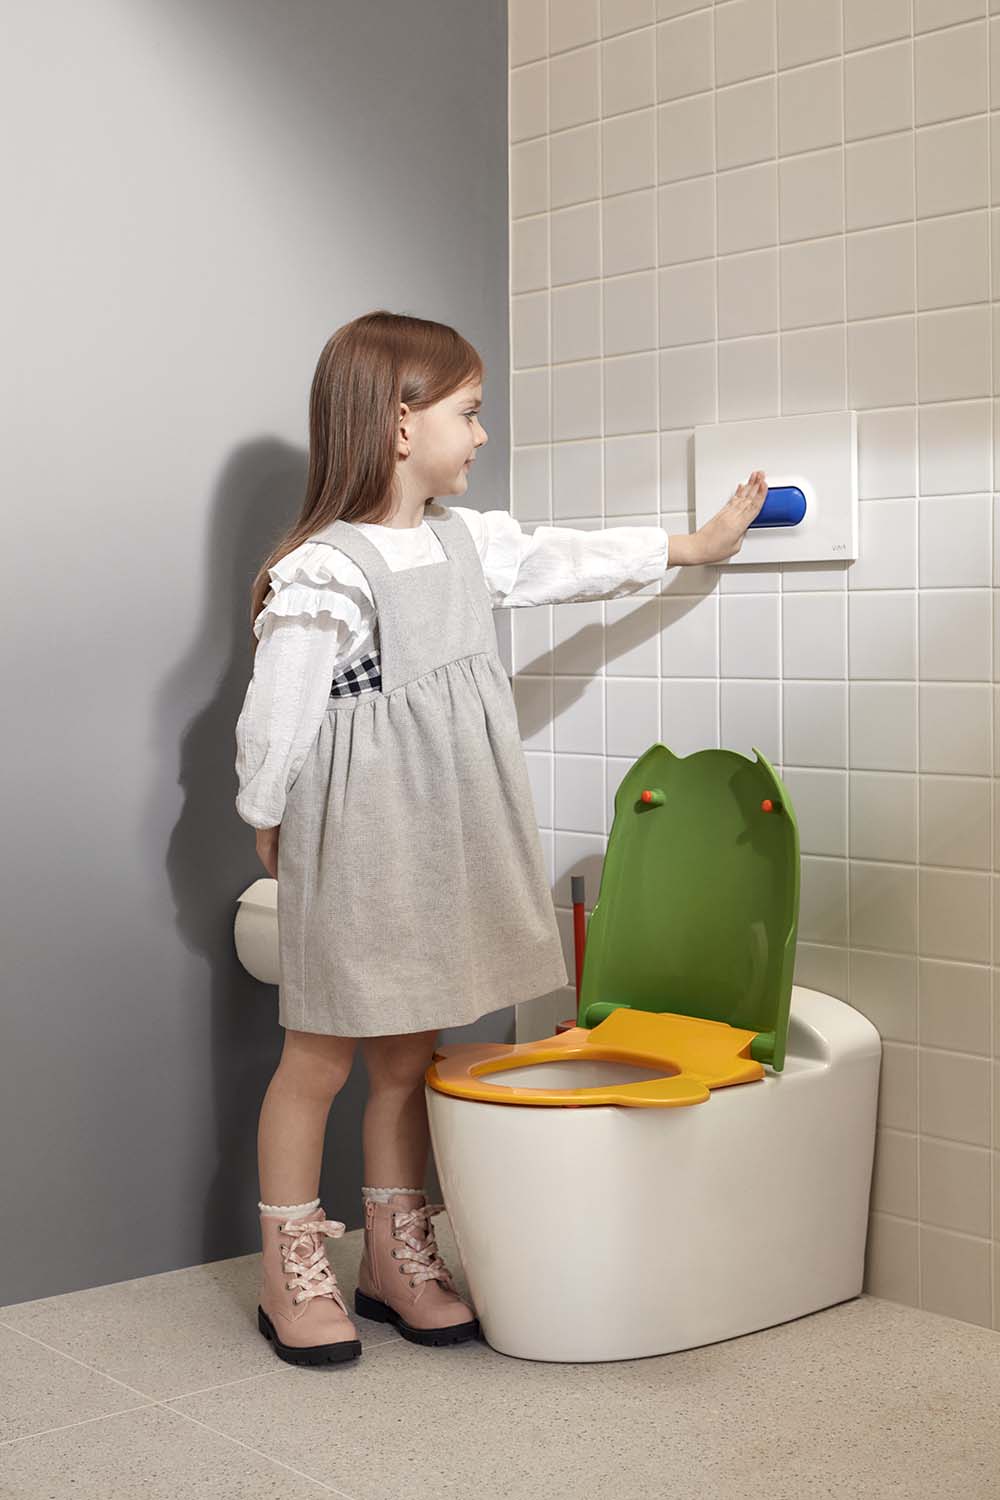 SENTO KIDS Inodoro con cisterna para niños By VitrA Bathrooms